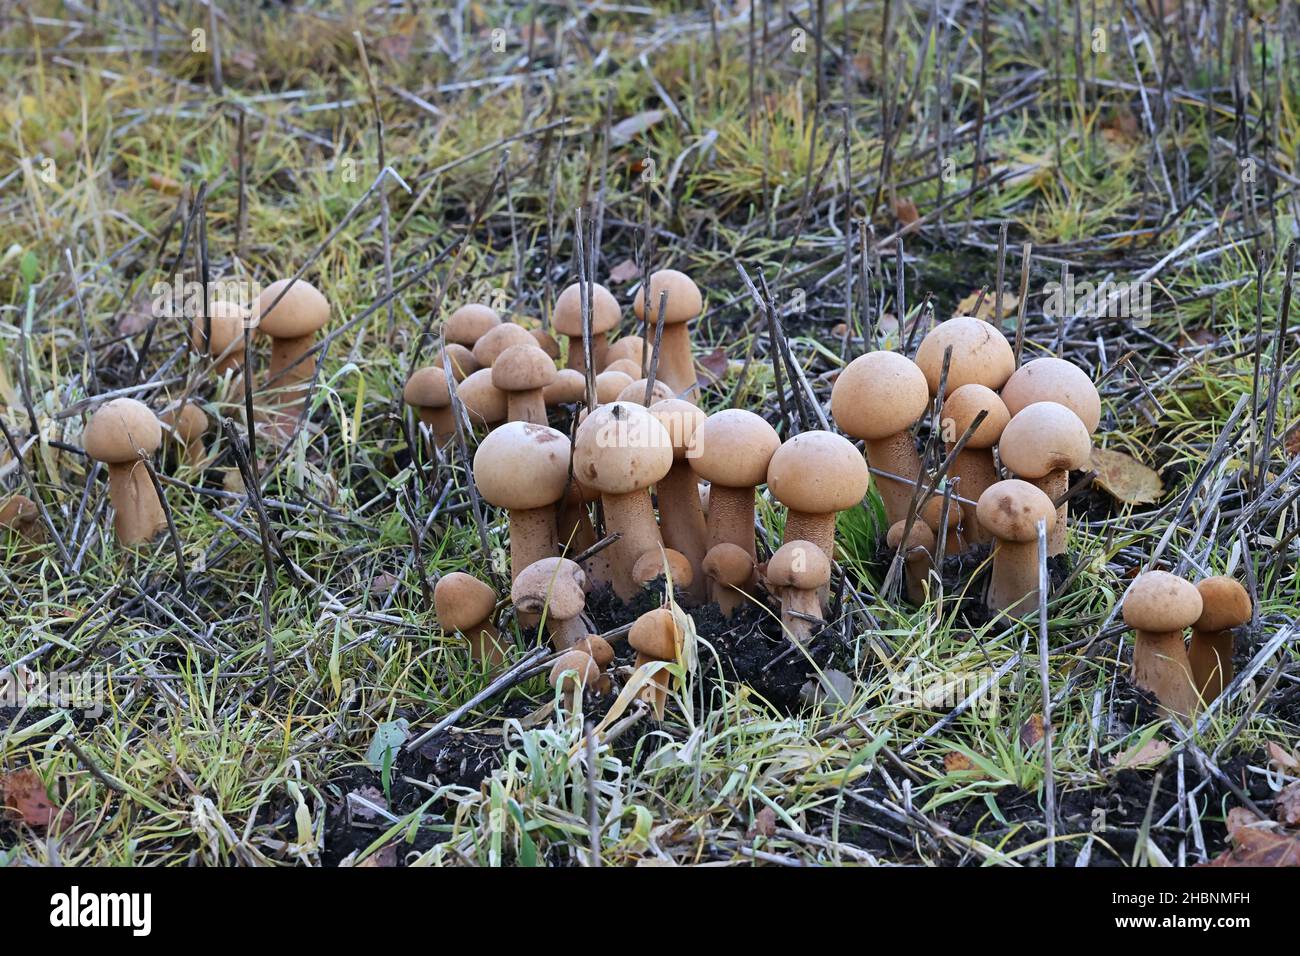 Phaeolepiota aurea, known as golden bootleg or golden cap, wild mushroom from Finland Stock Photo